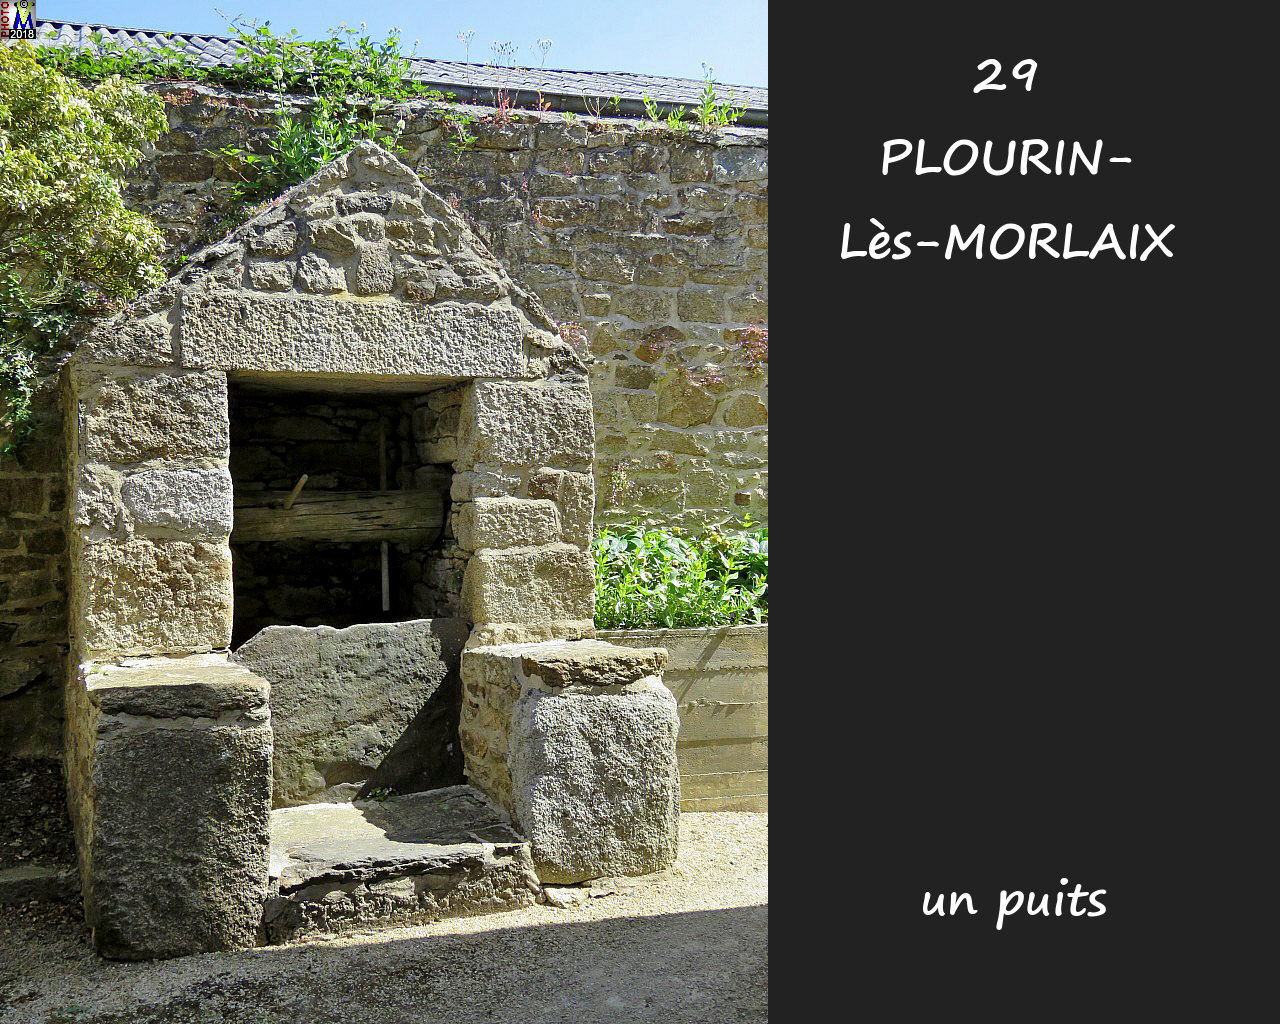 29PLOURIN-MORLAIX_puits_100.jpg